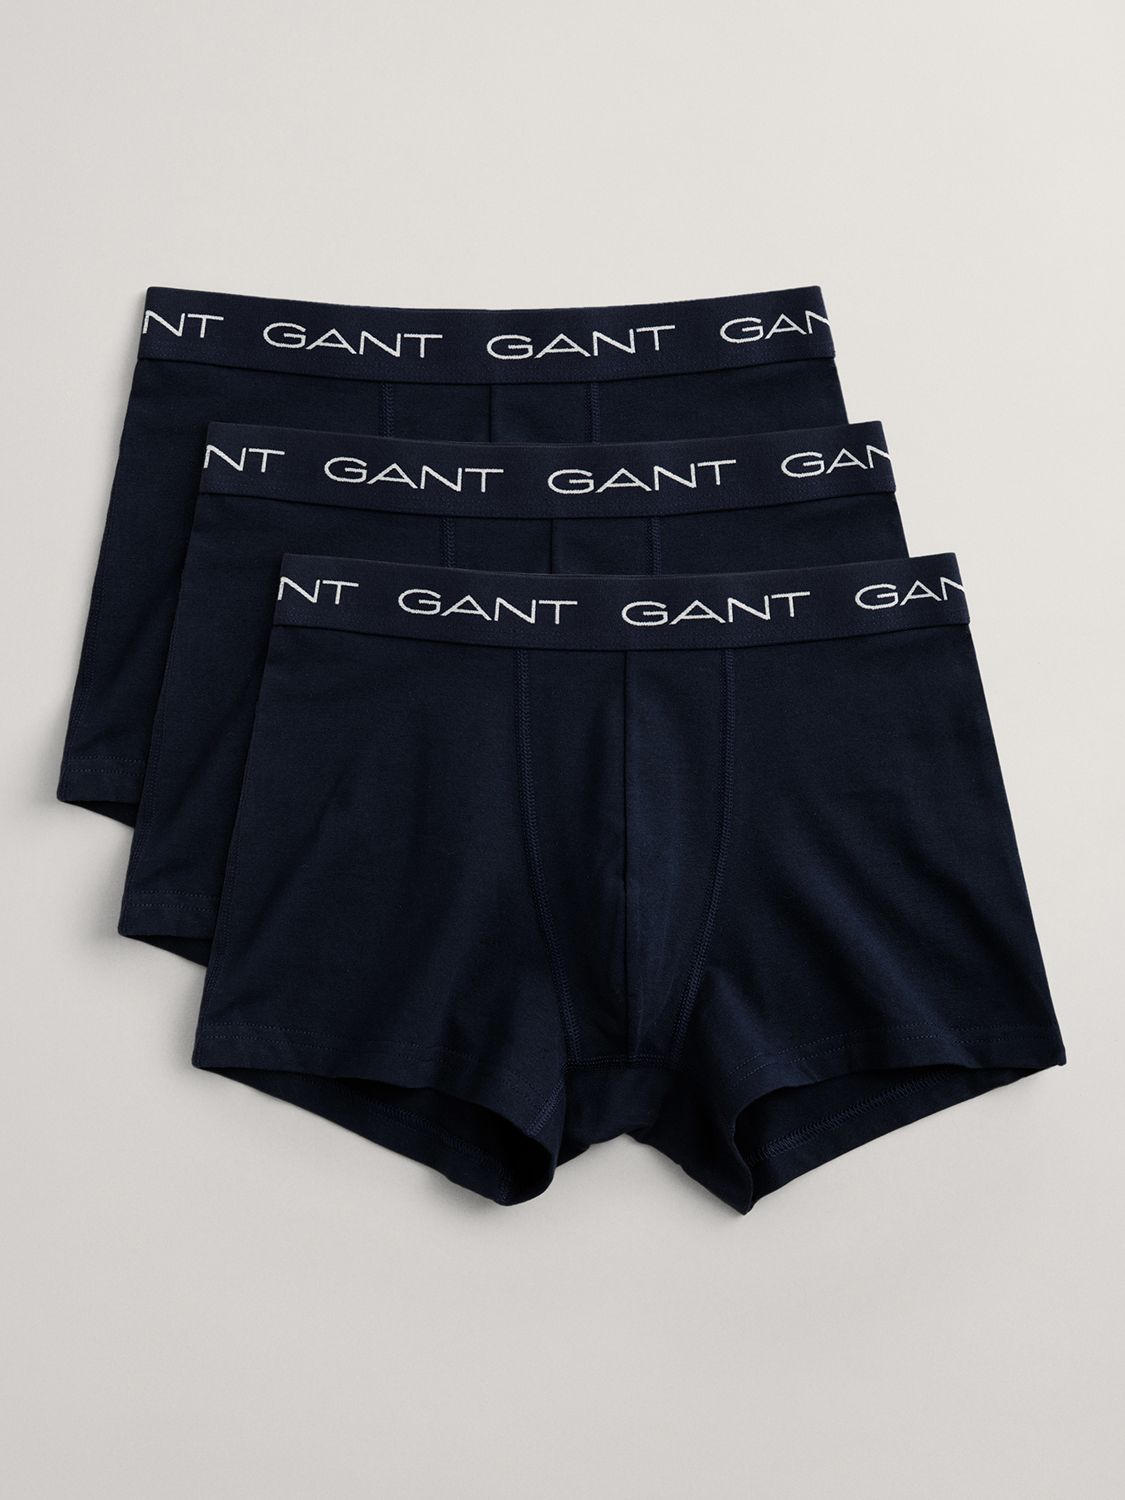 GANT Cotton Stretch Jersey Trunks, Pack of 3, Navy, M